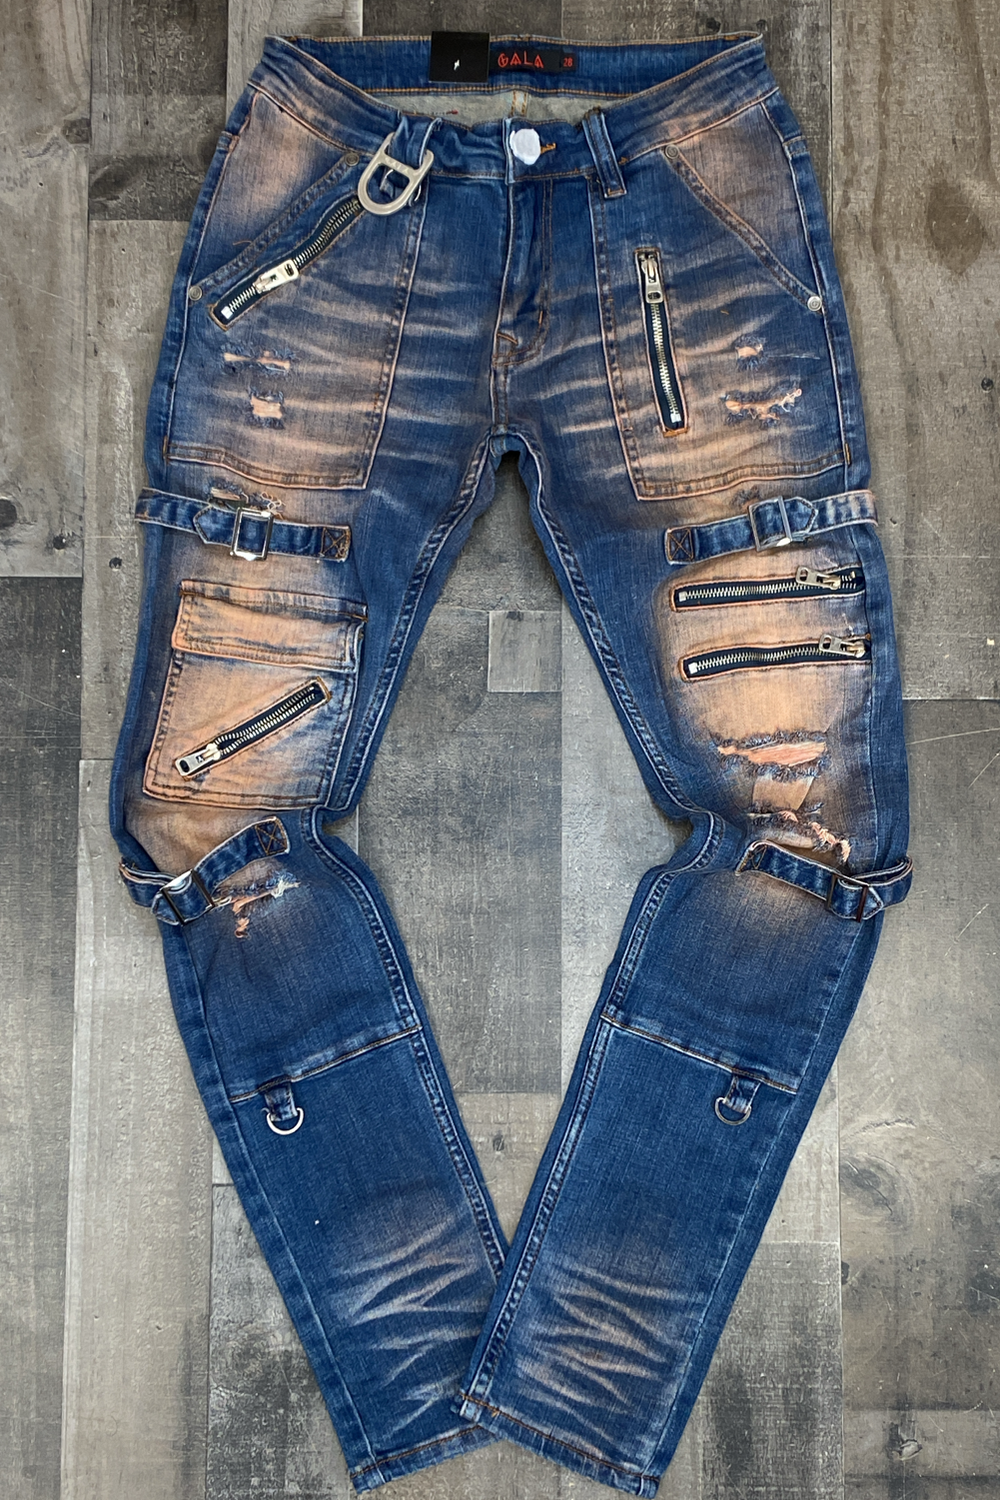 Gala- Blaine indigo wheat jeans